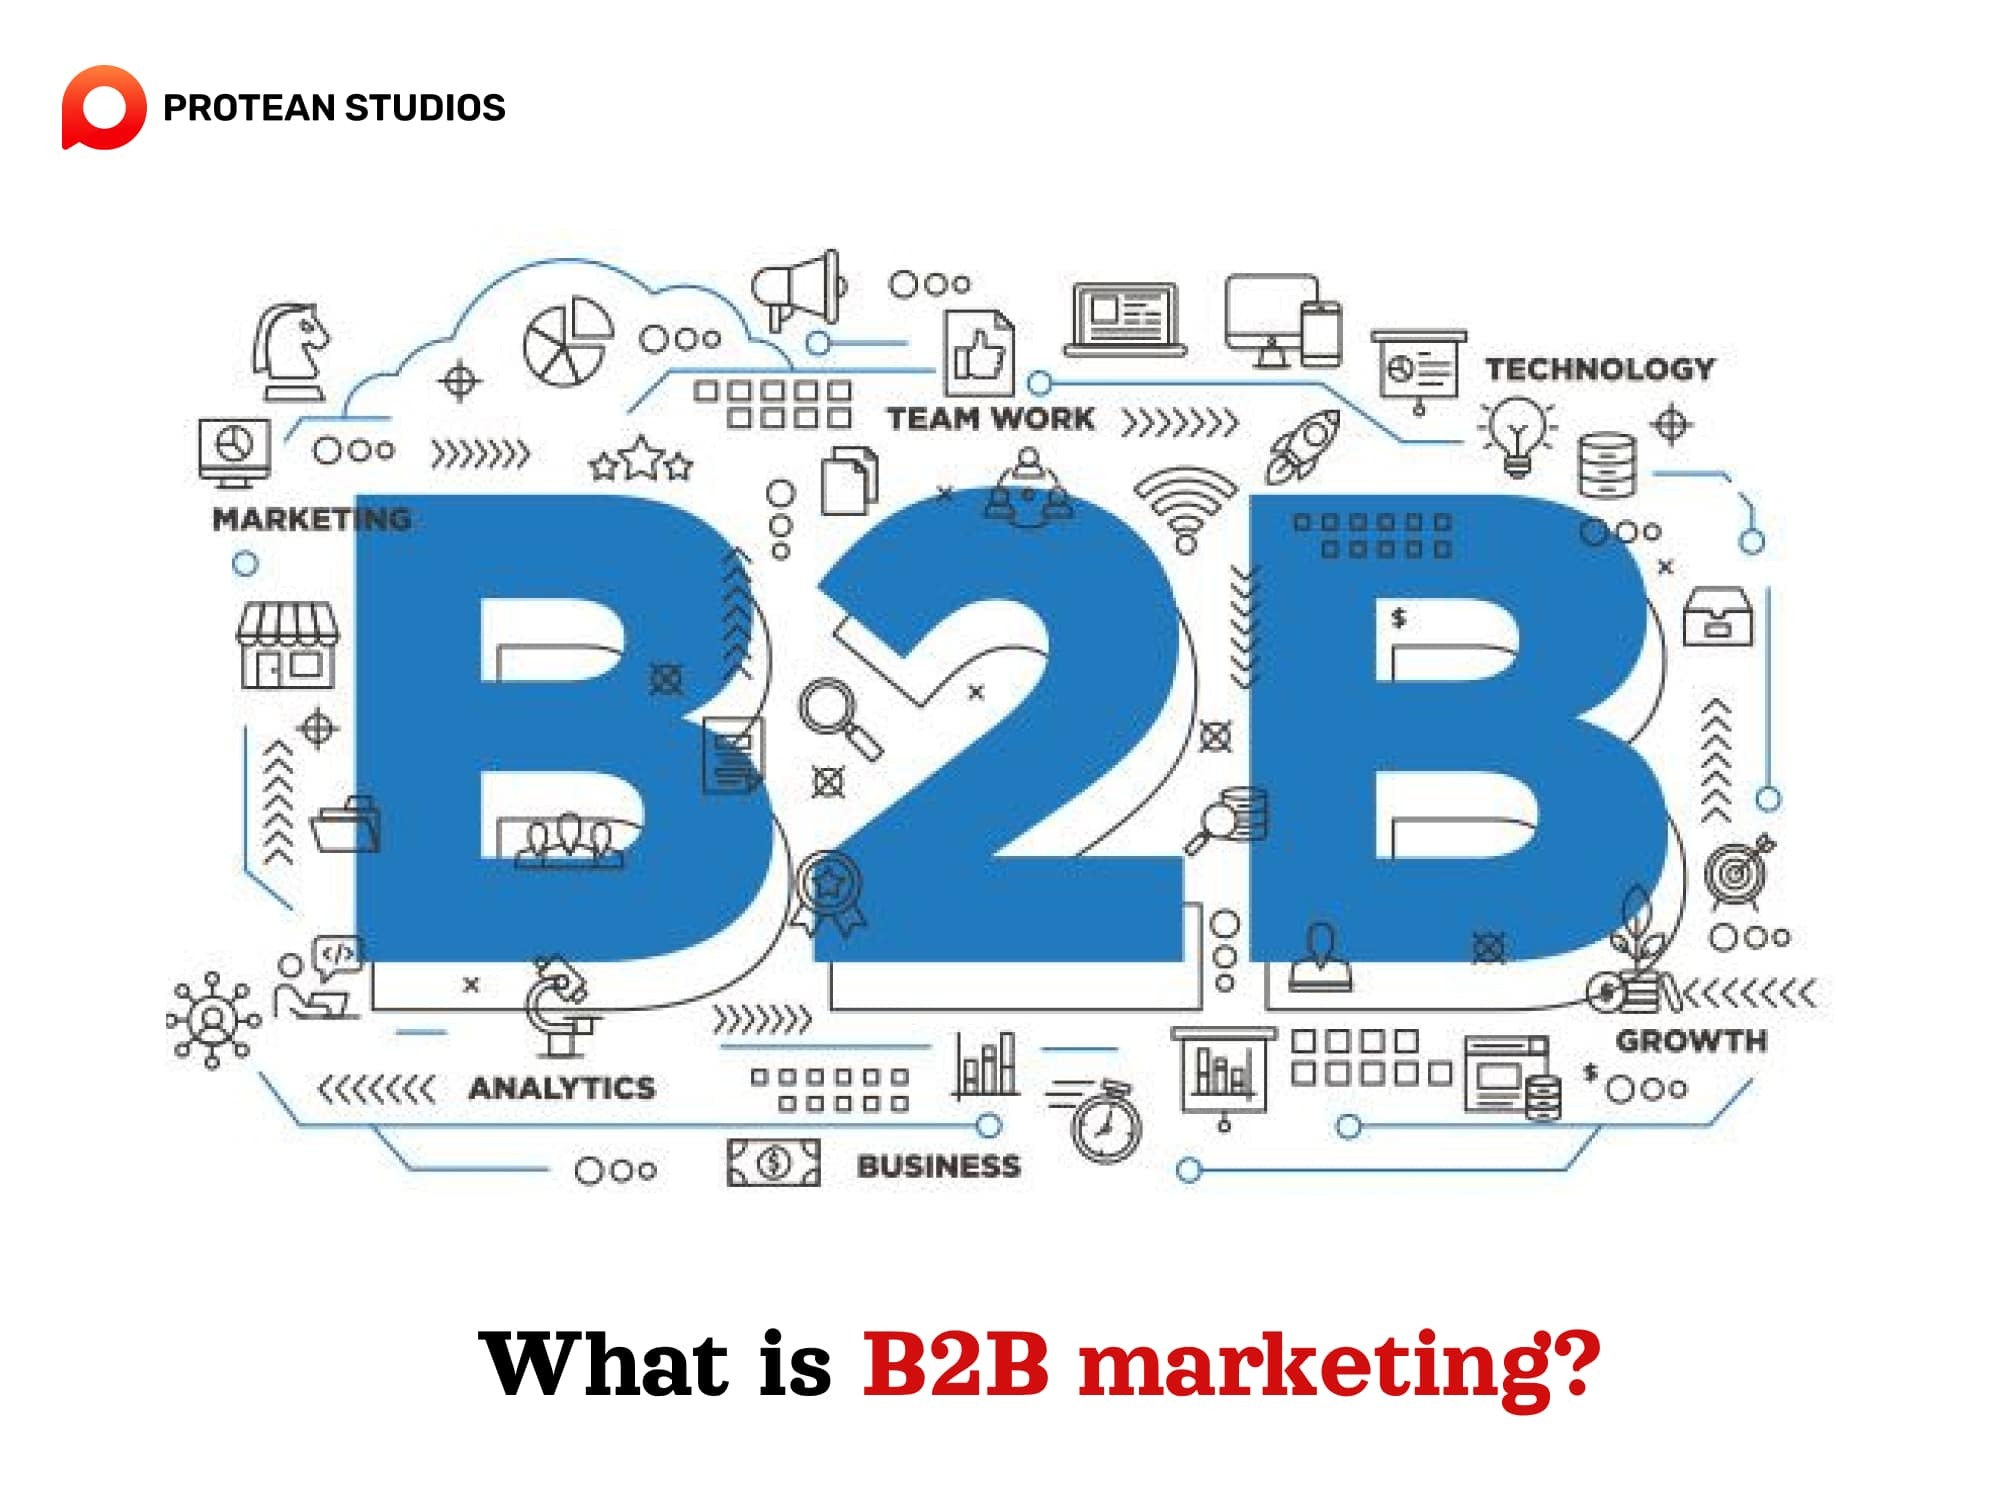 Foundational information about B2B marketing